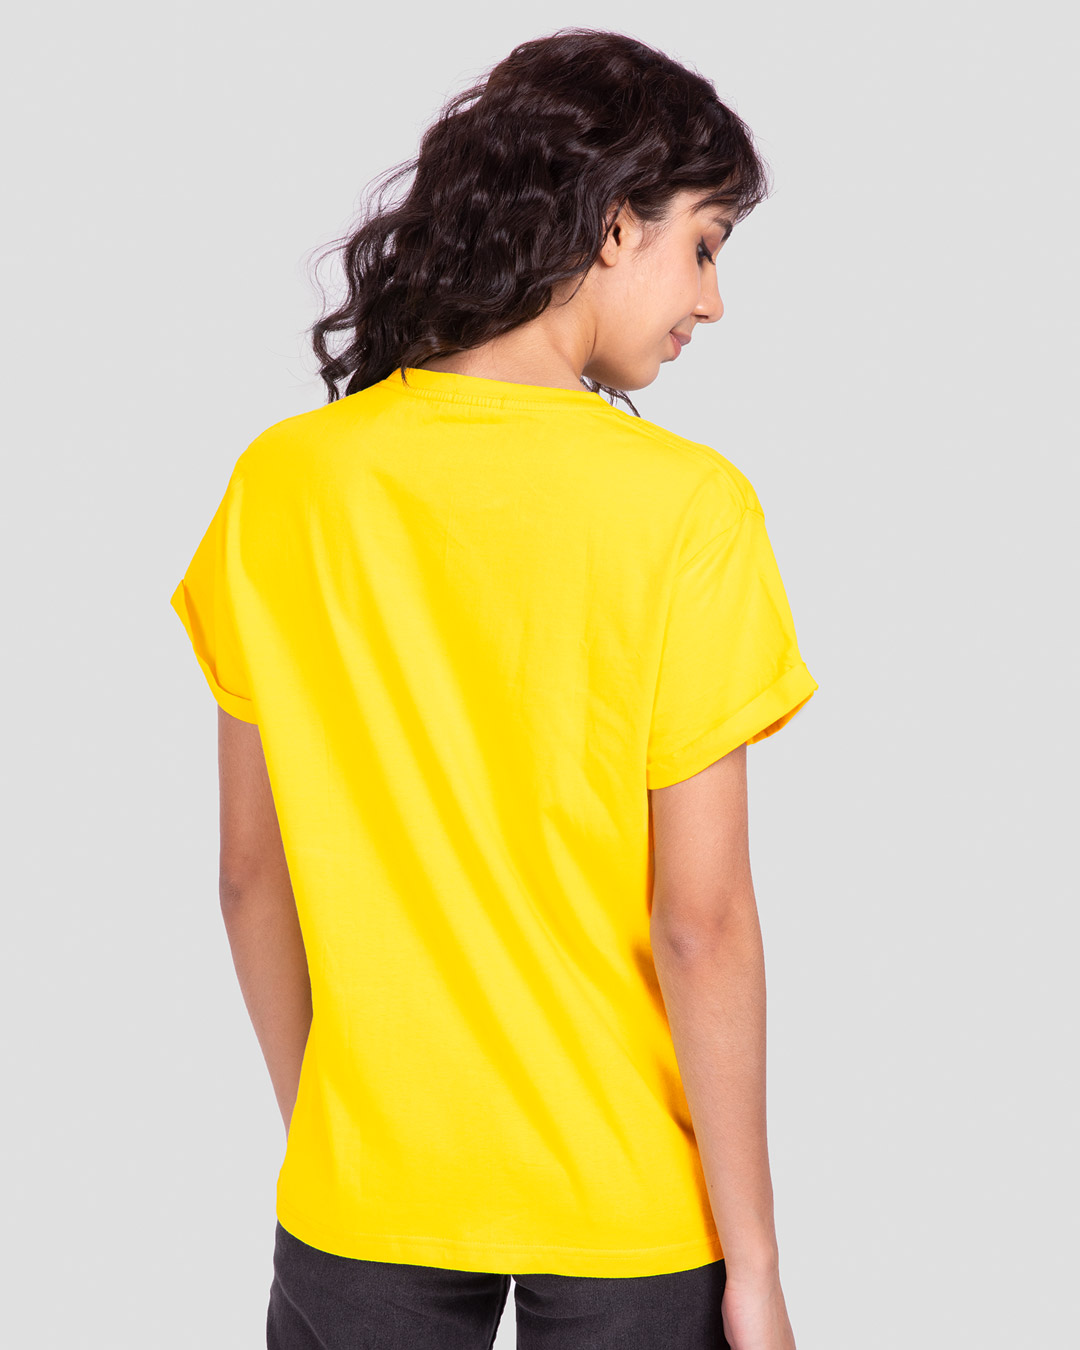 Shop Overrated Boyfriend T-Shirt (DL) Pineapple Yellow-Back